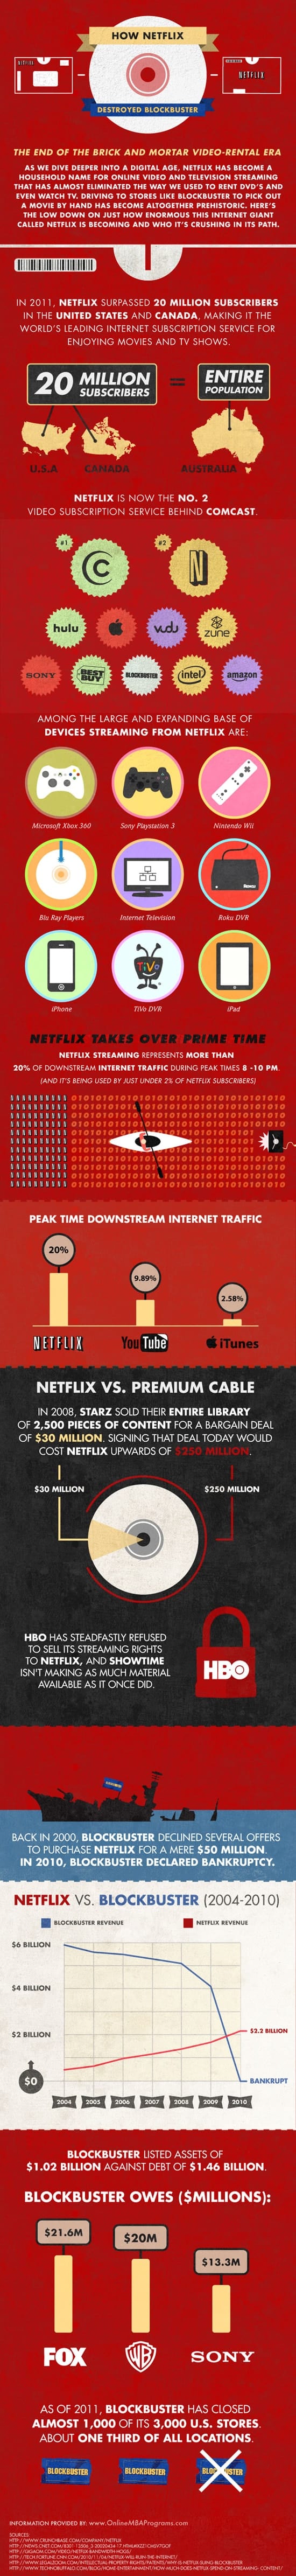 How Netflix Destroyed Blockbuster